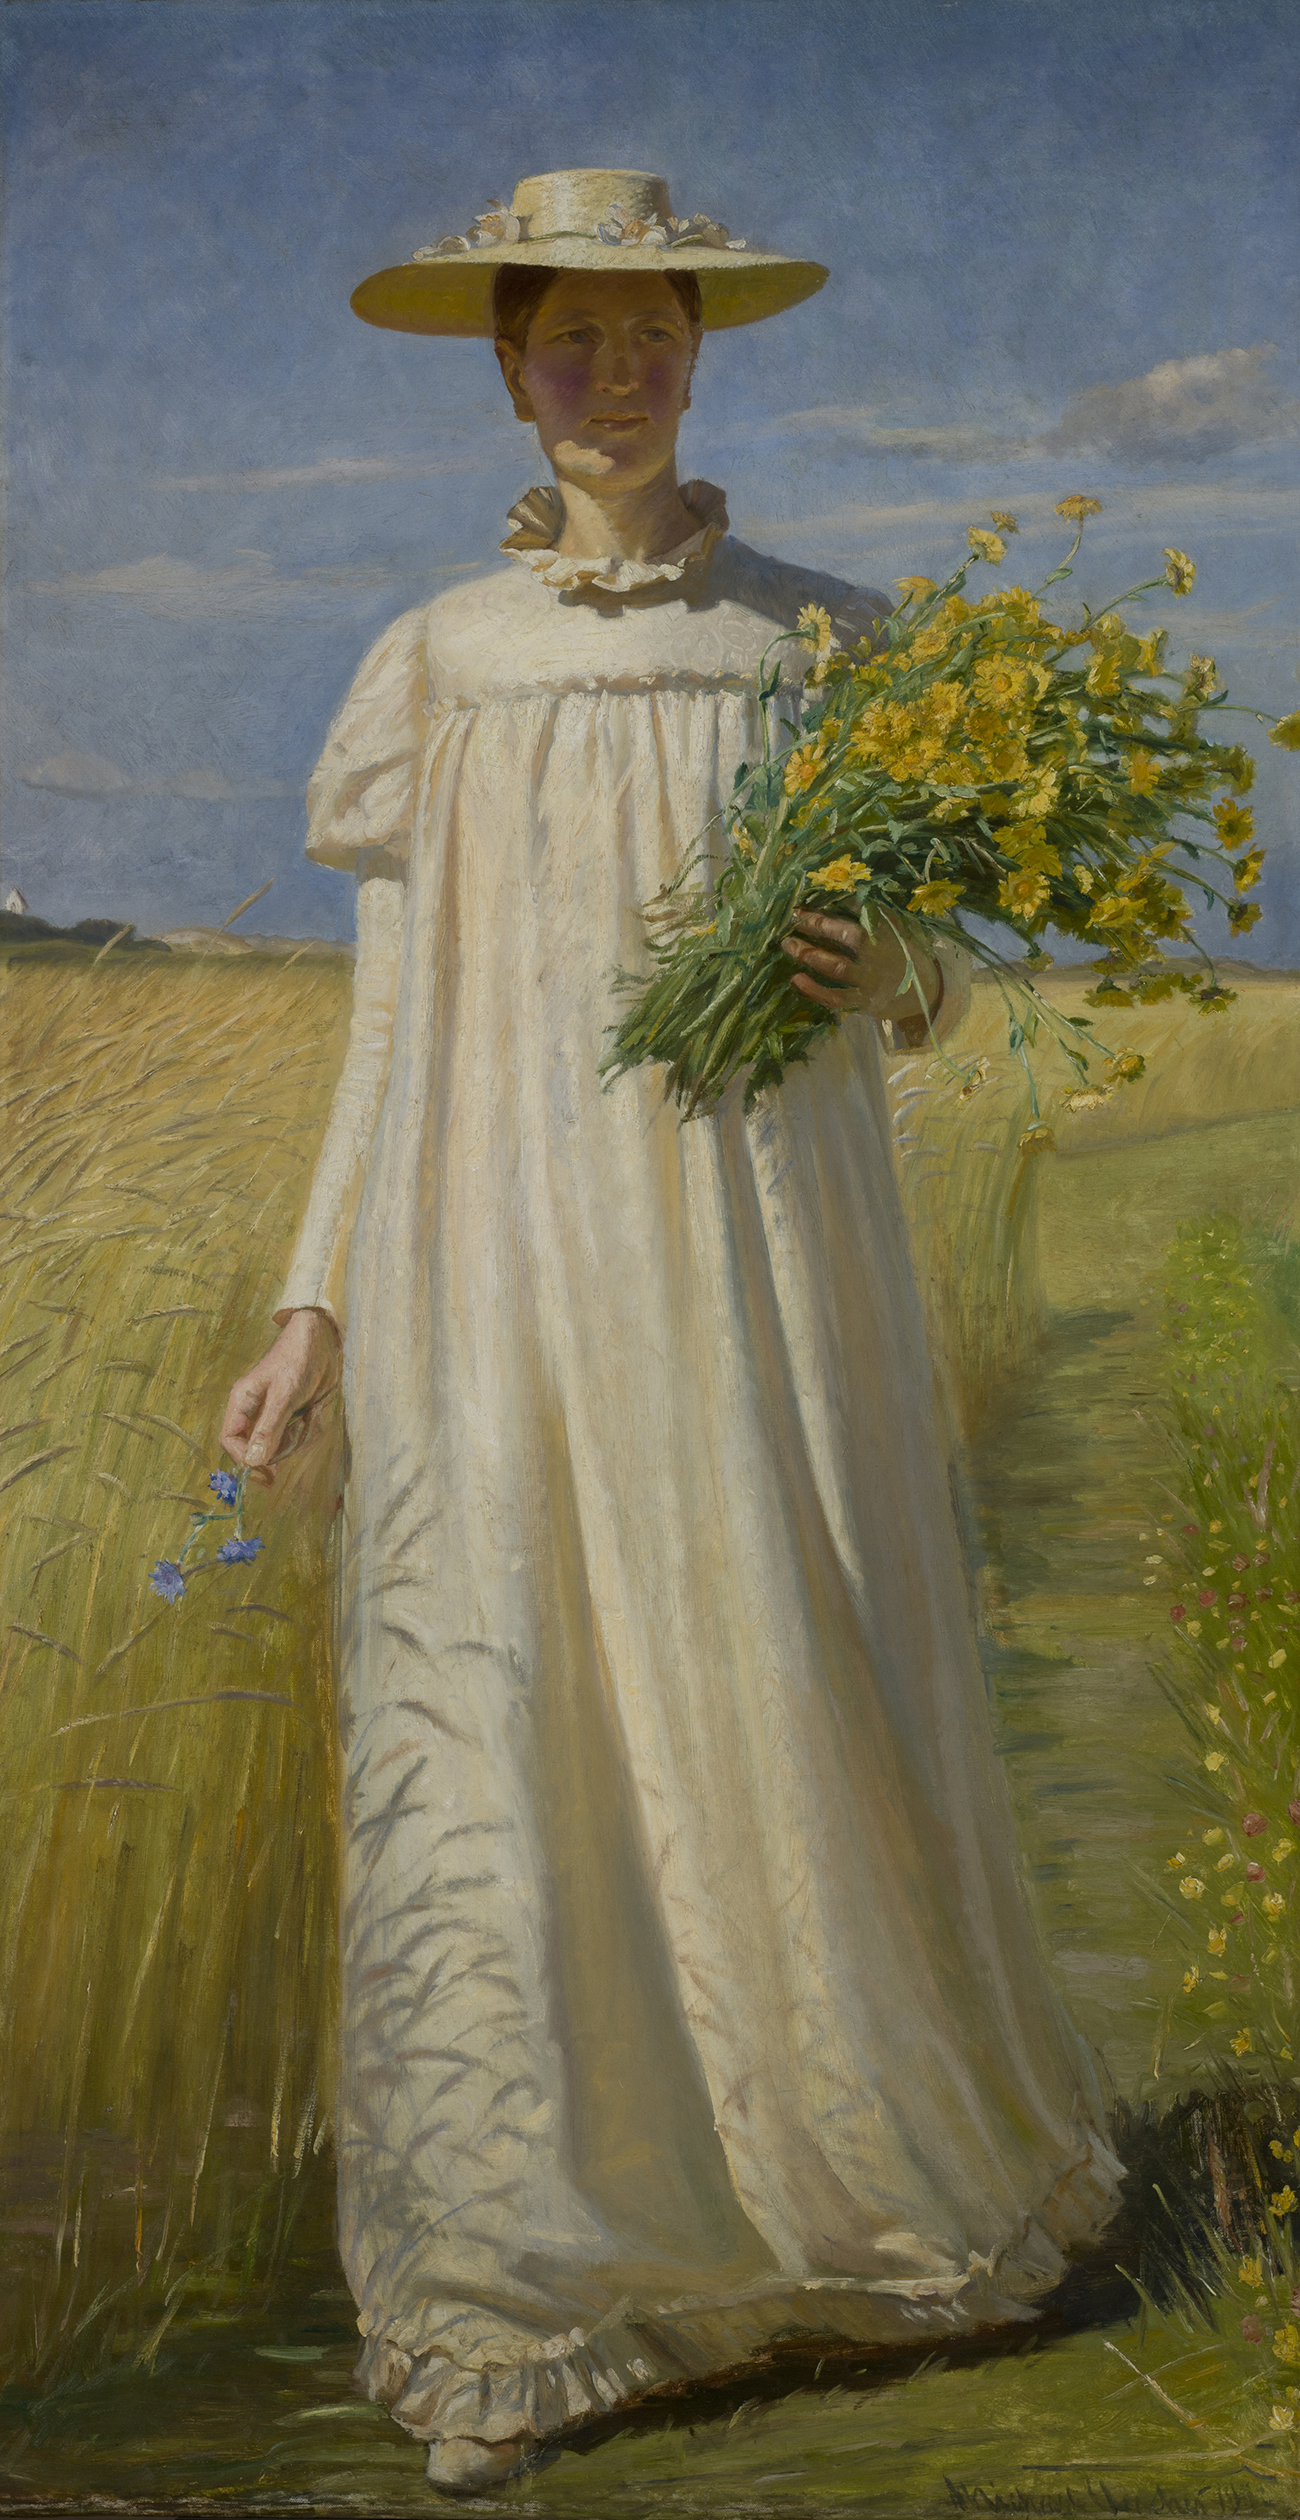 Anna Ancher mentre torna dai campi by Michael Ancher - 1902 - 64 x 55 cm 